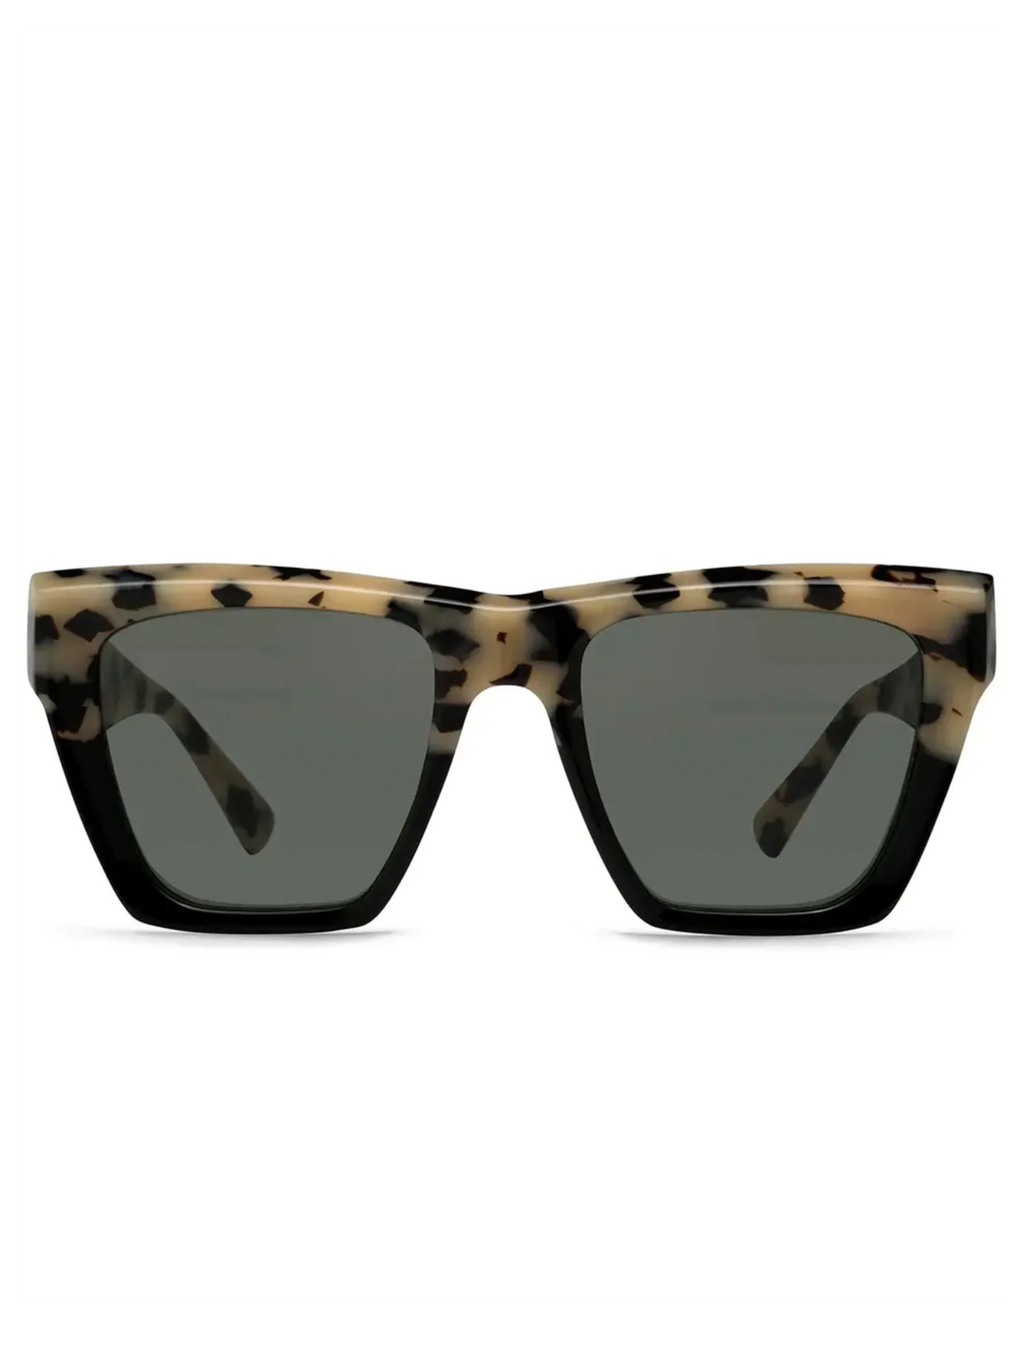 Trendkill Split Tortoise Grey Sunglasses